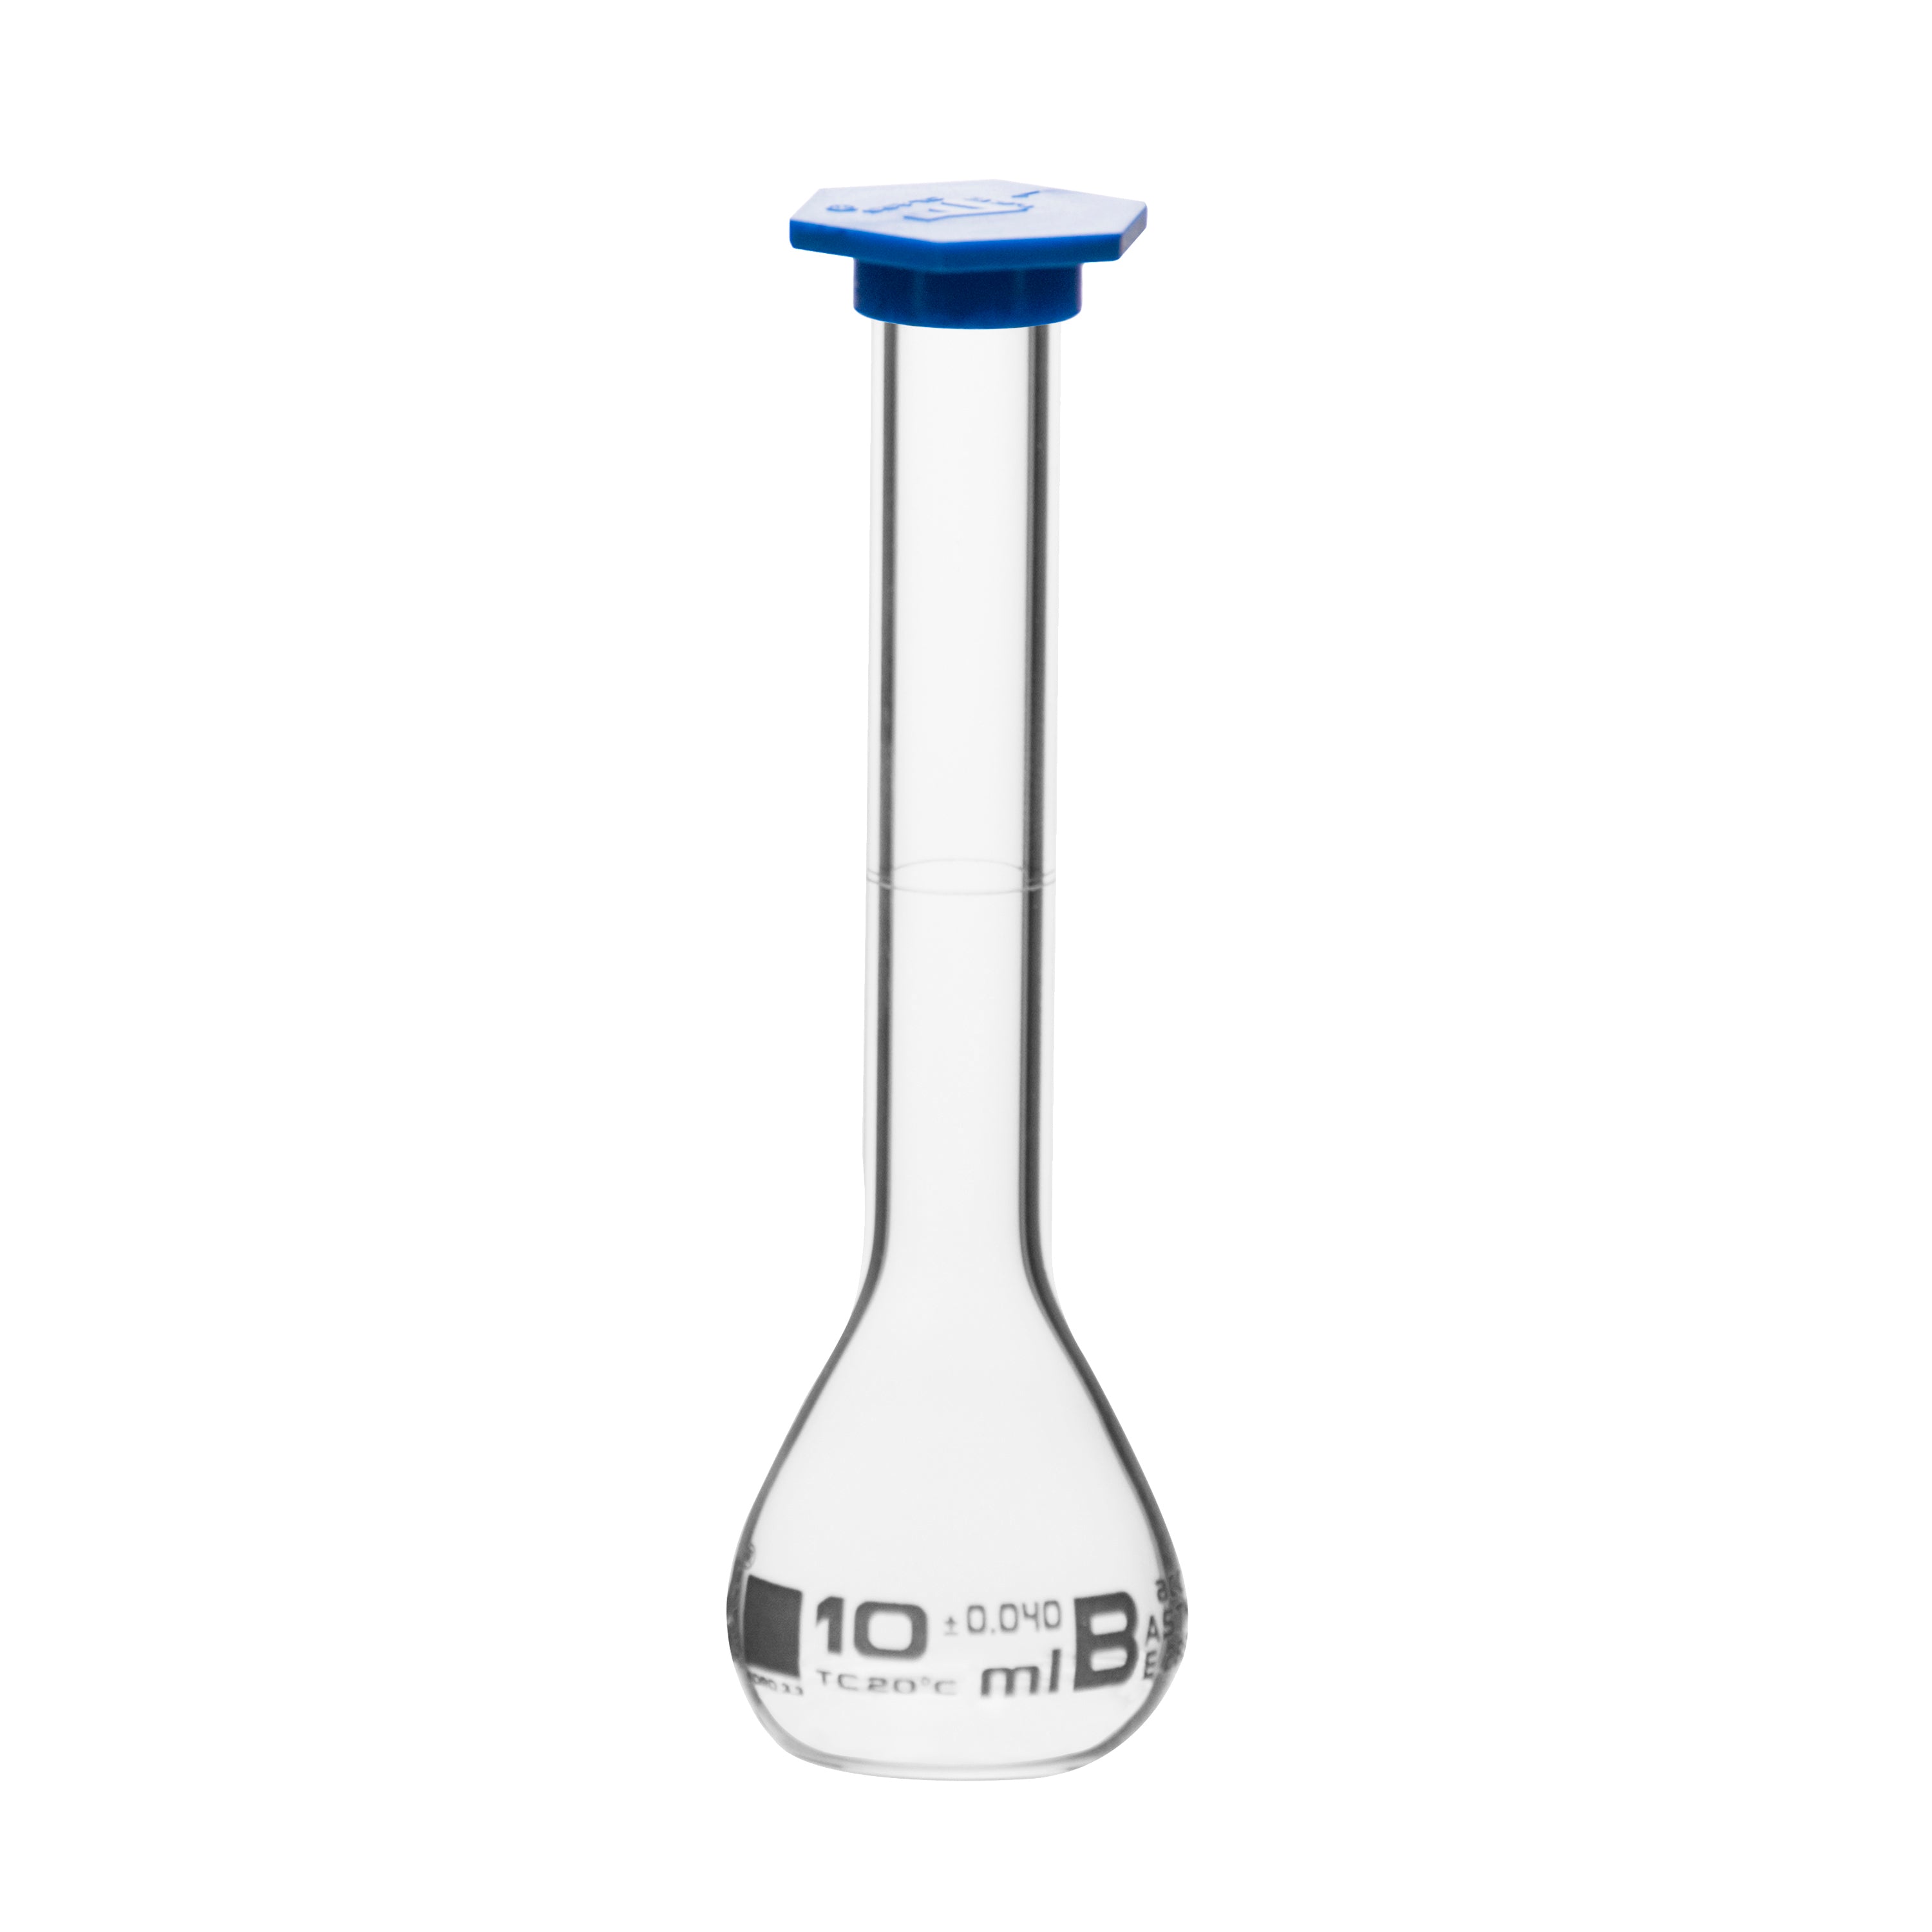 Borosilicate Volumetric Flask with Polyethylene Snap Cap, 10 ml, Class B, White Print, ASTM, Autoclavable